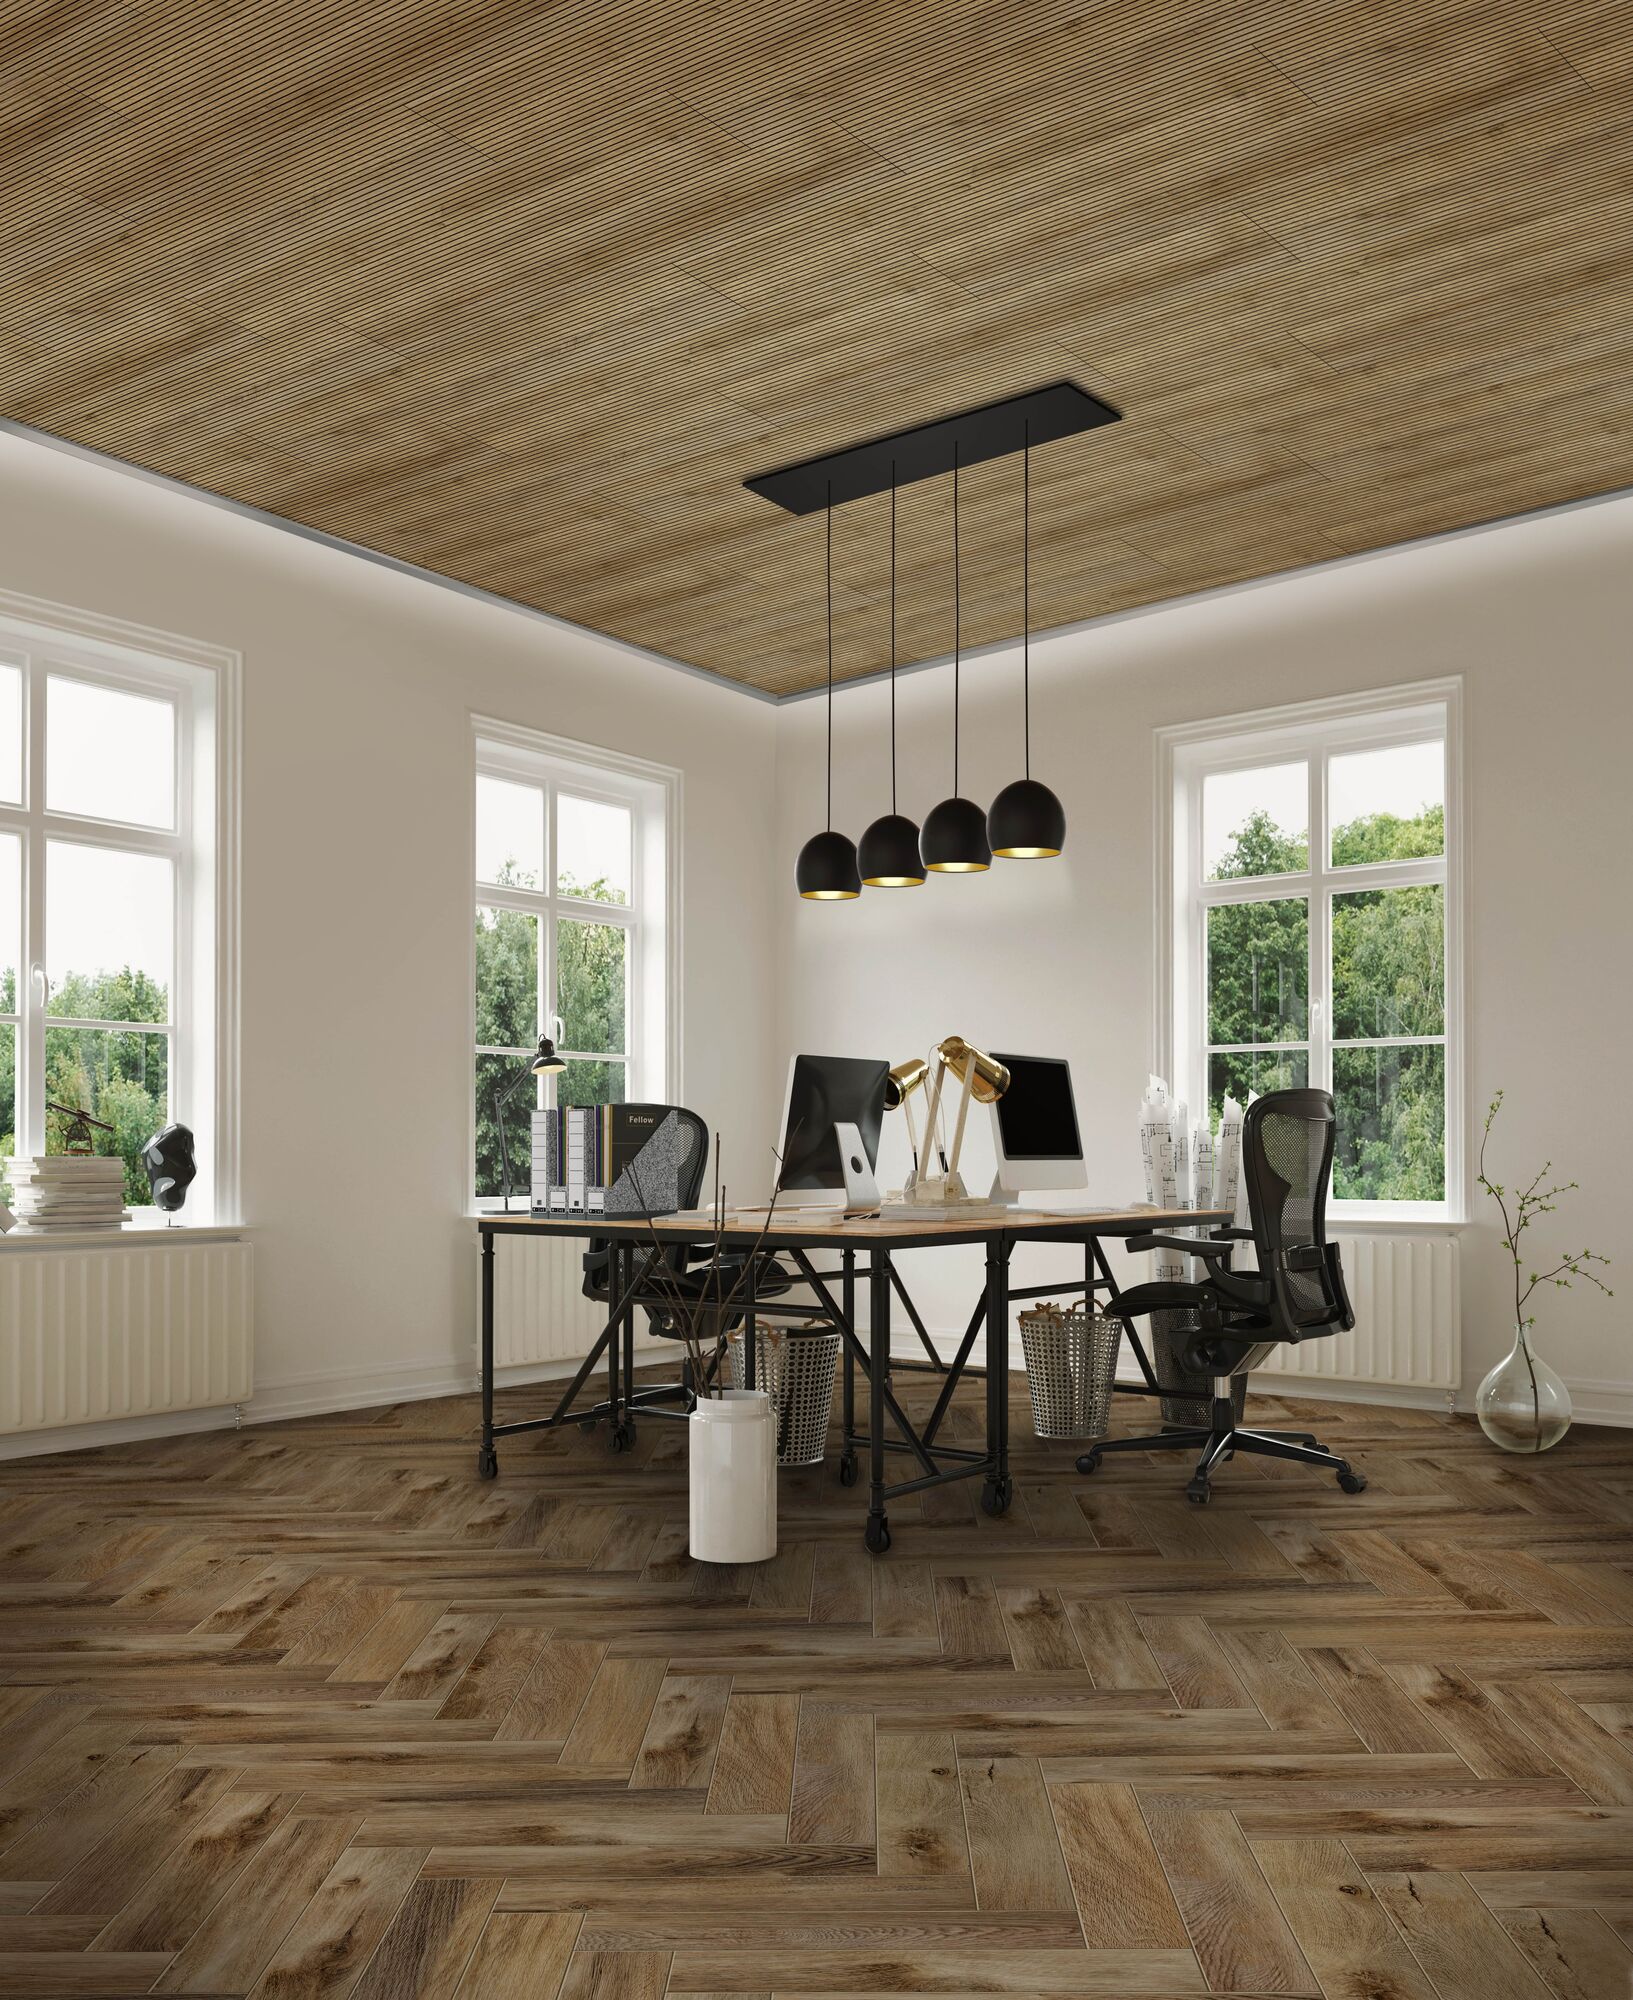 Office with herringbone floor